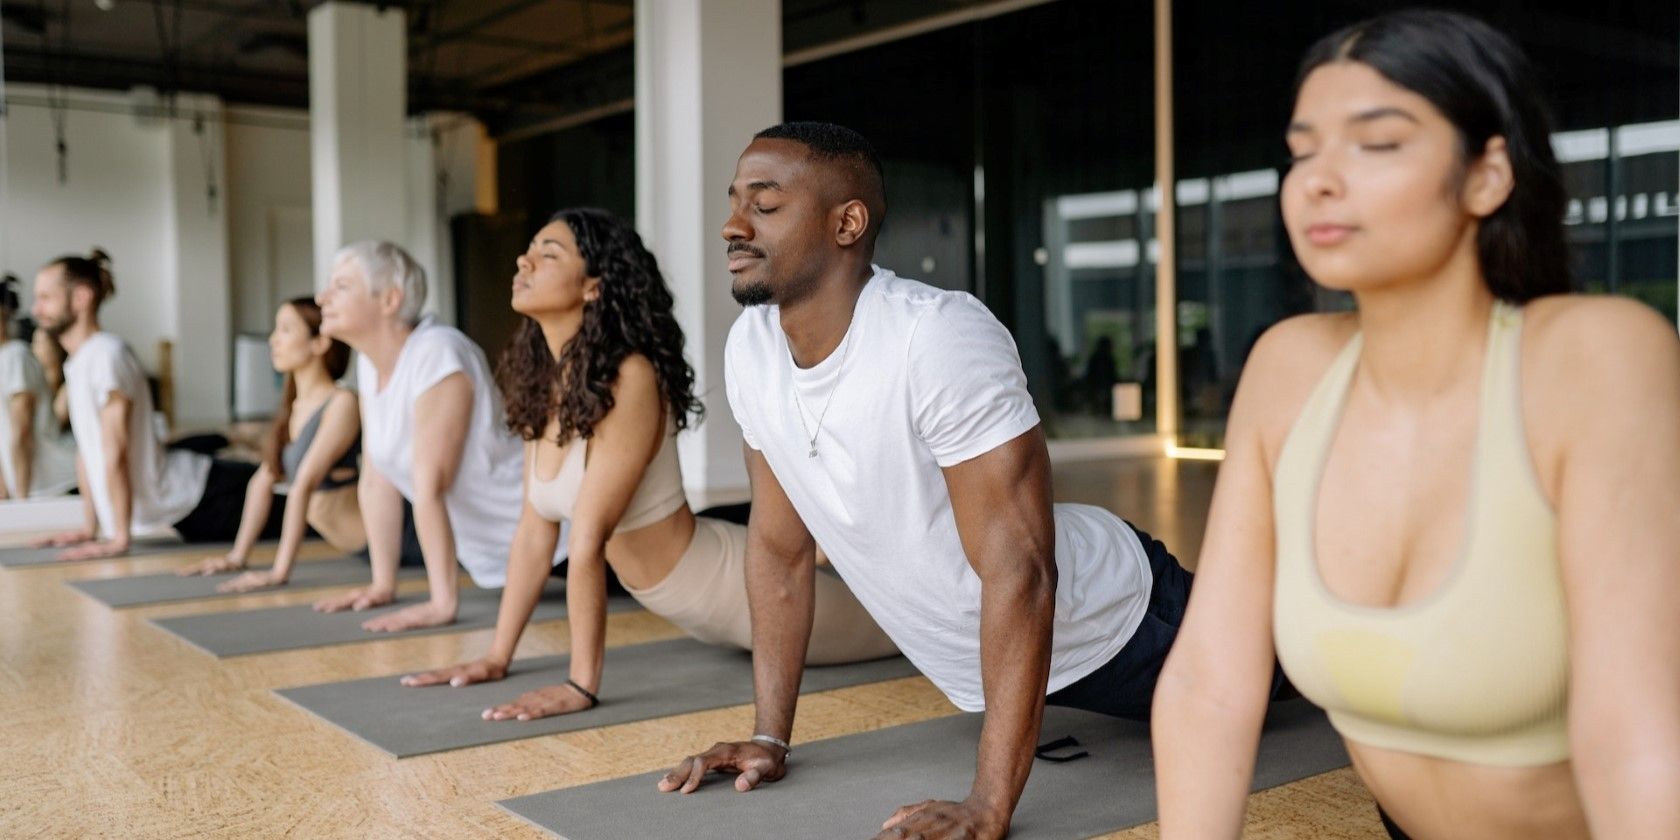 Choosing the Perfect Yoga Class